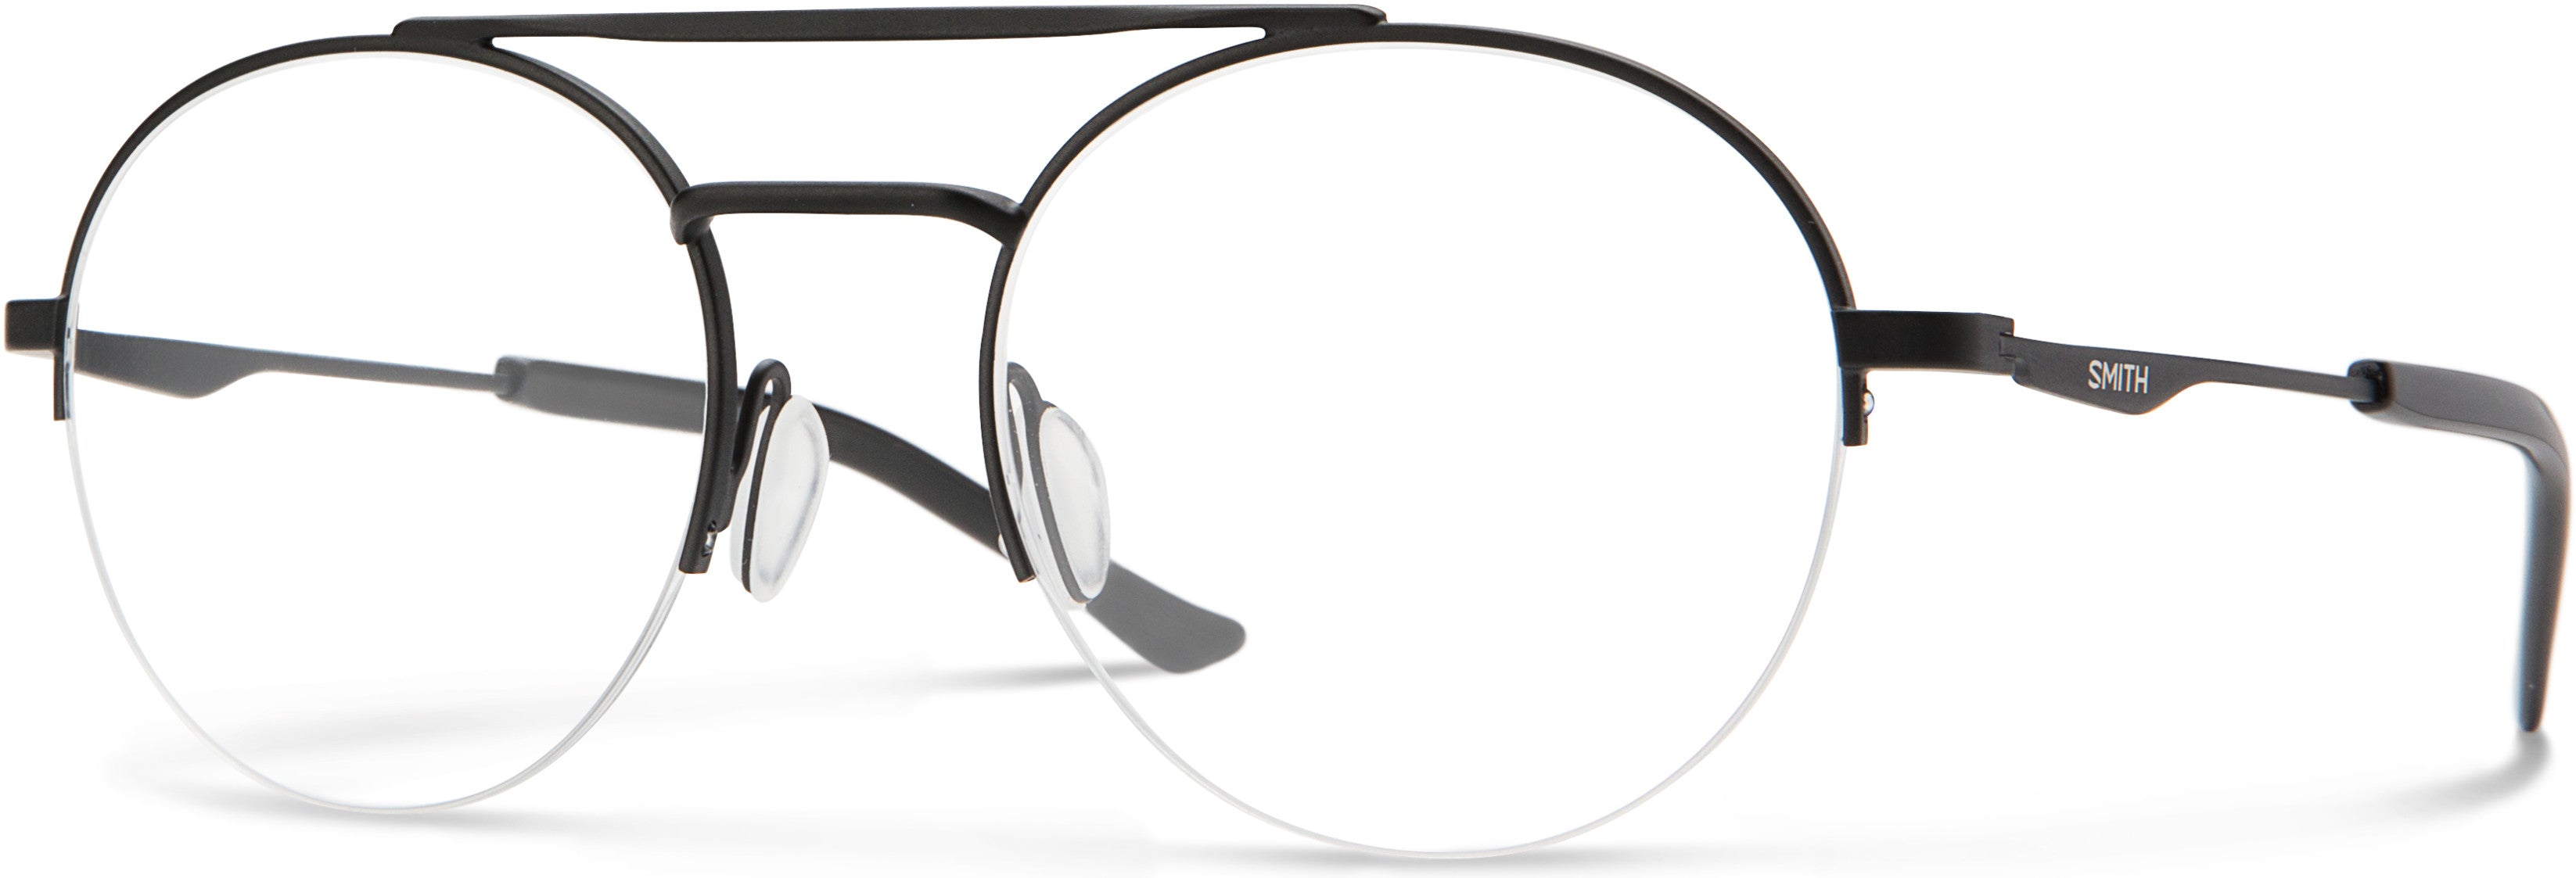  Smith Porter Oval Modified Eyeglasses 0003-0003  Matte Black (00 Demo Lens)